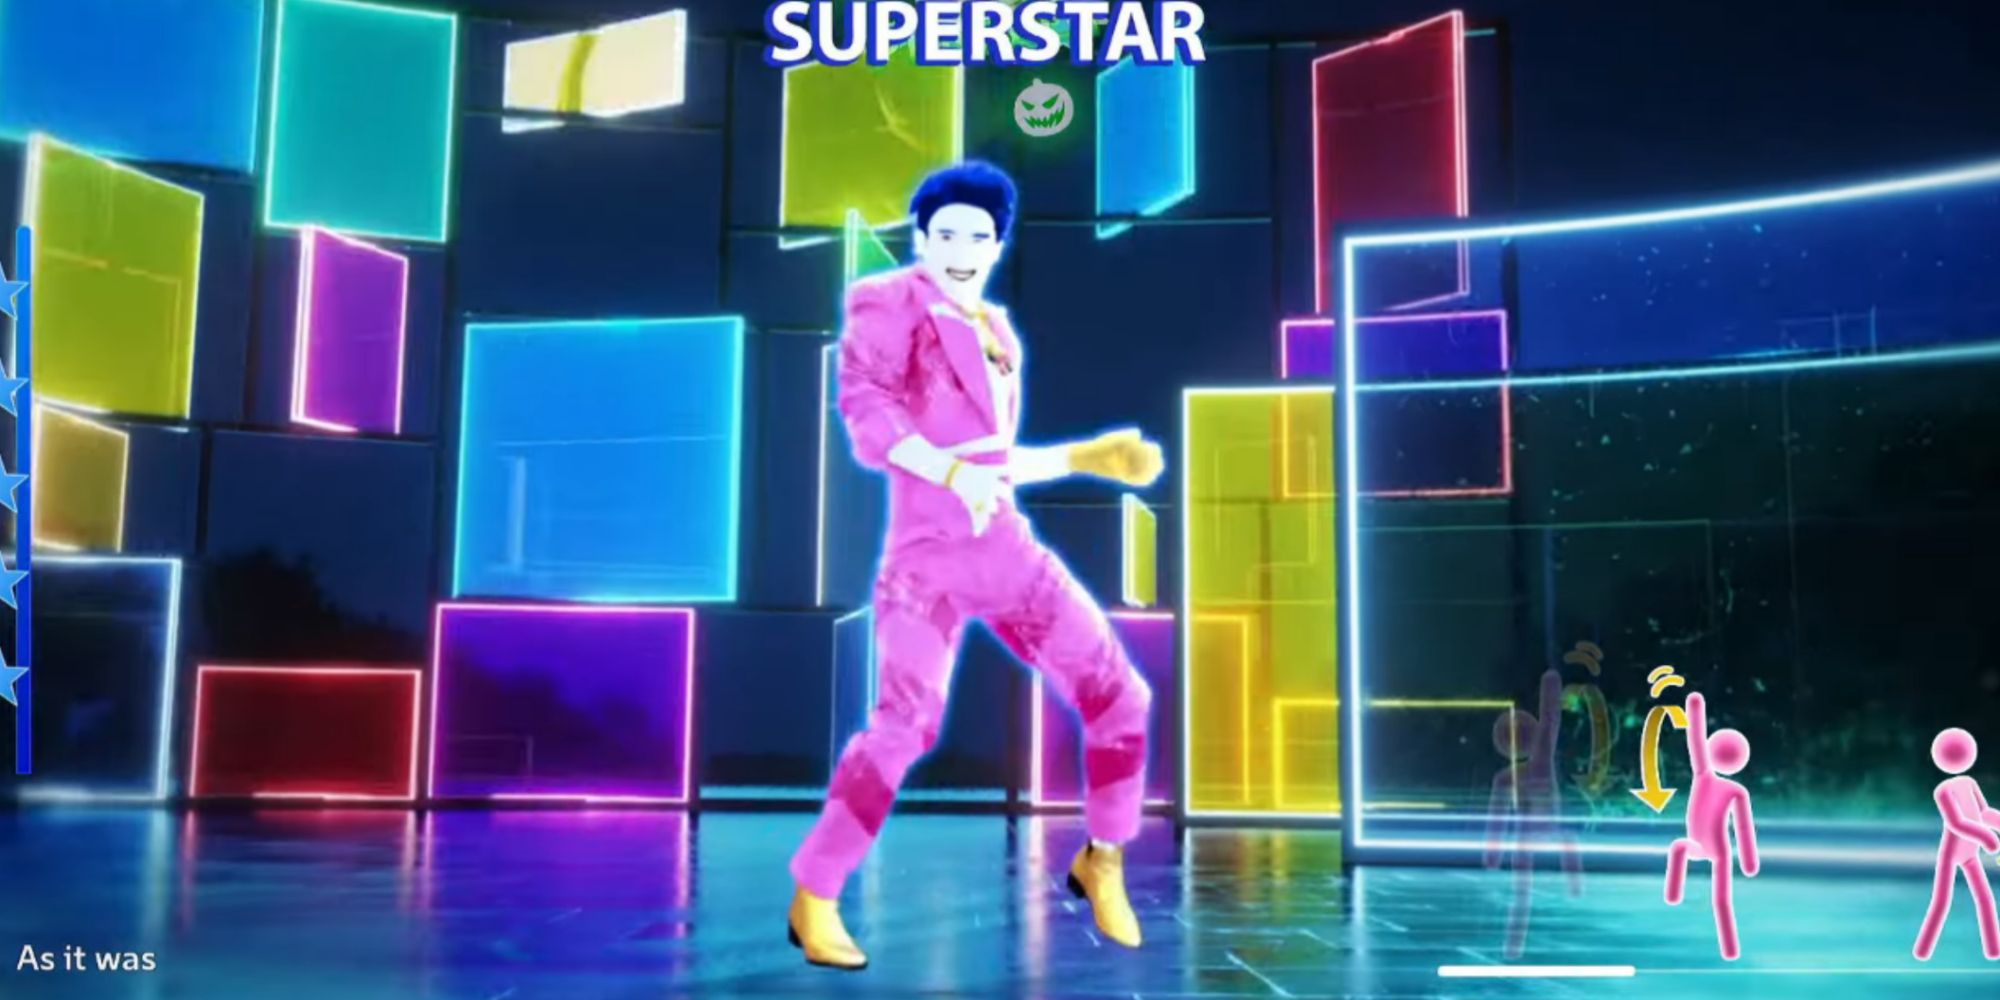 Pink suit Just Dance character dancing